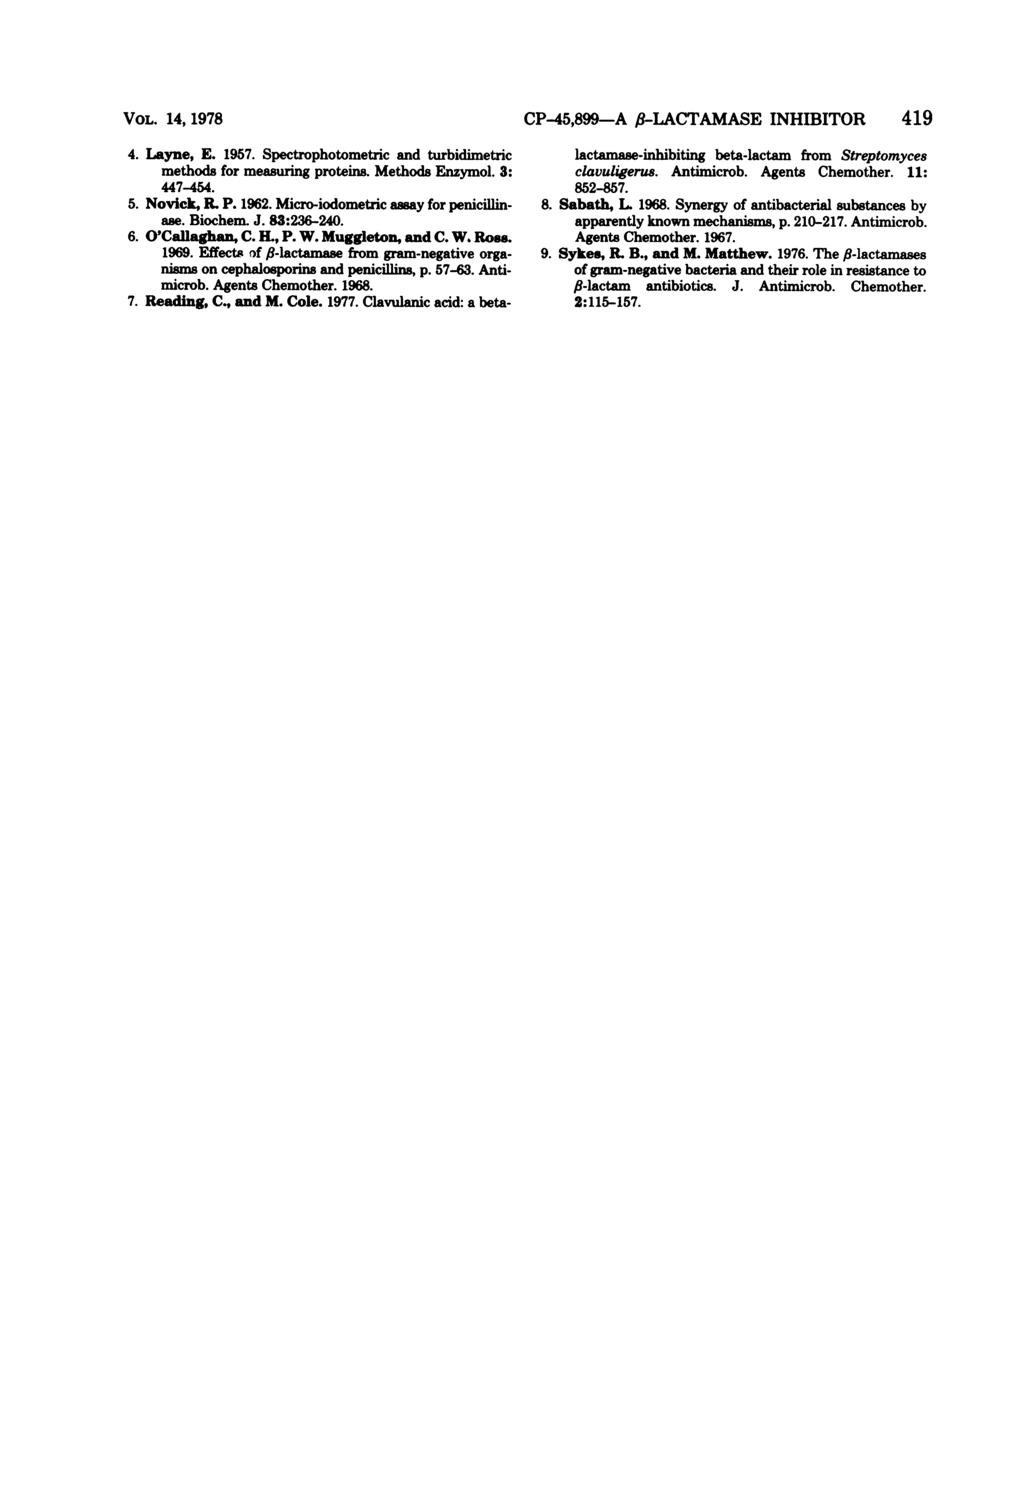 VOL. 14, 1978 4. Layne, E. 1957. Spectrophotometric and turbidimetric methods for measuring proteins. Methods Enzymol. 3: 447-454. 5. Novick, R. P. 1962. Micro-iodometric assay for penicillinase.